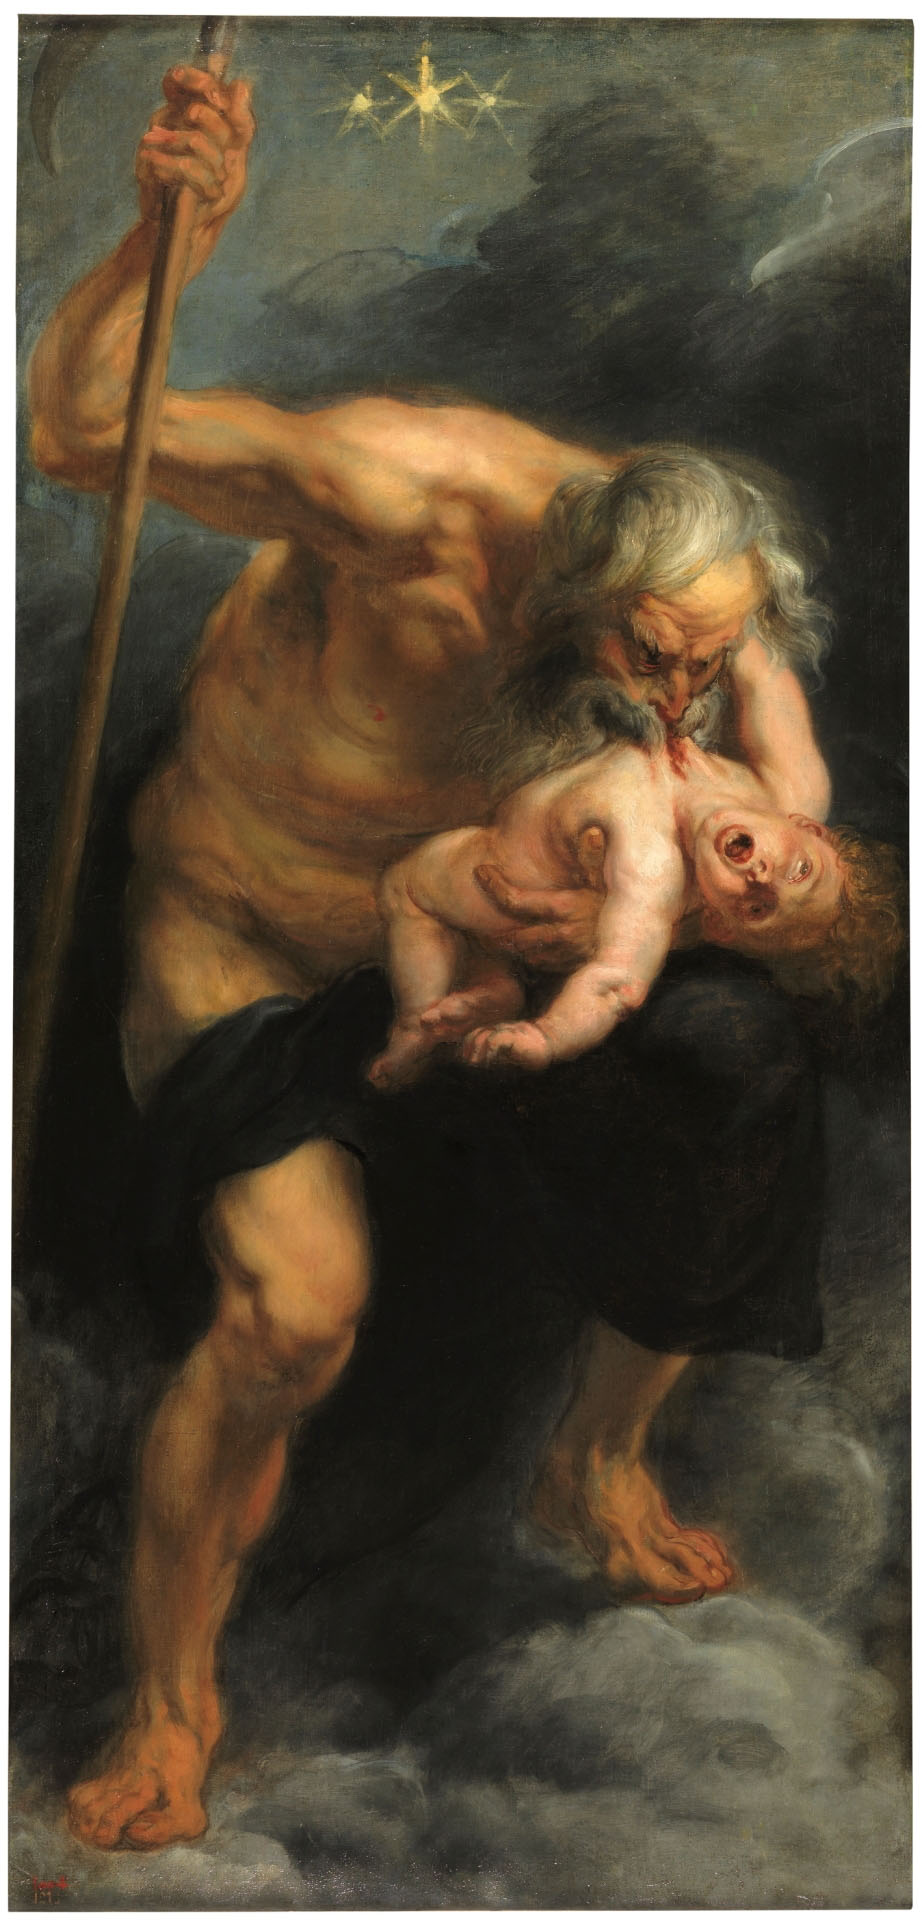 Saturno devorando a su hijo-Rubens.jpg